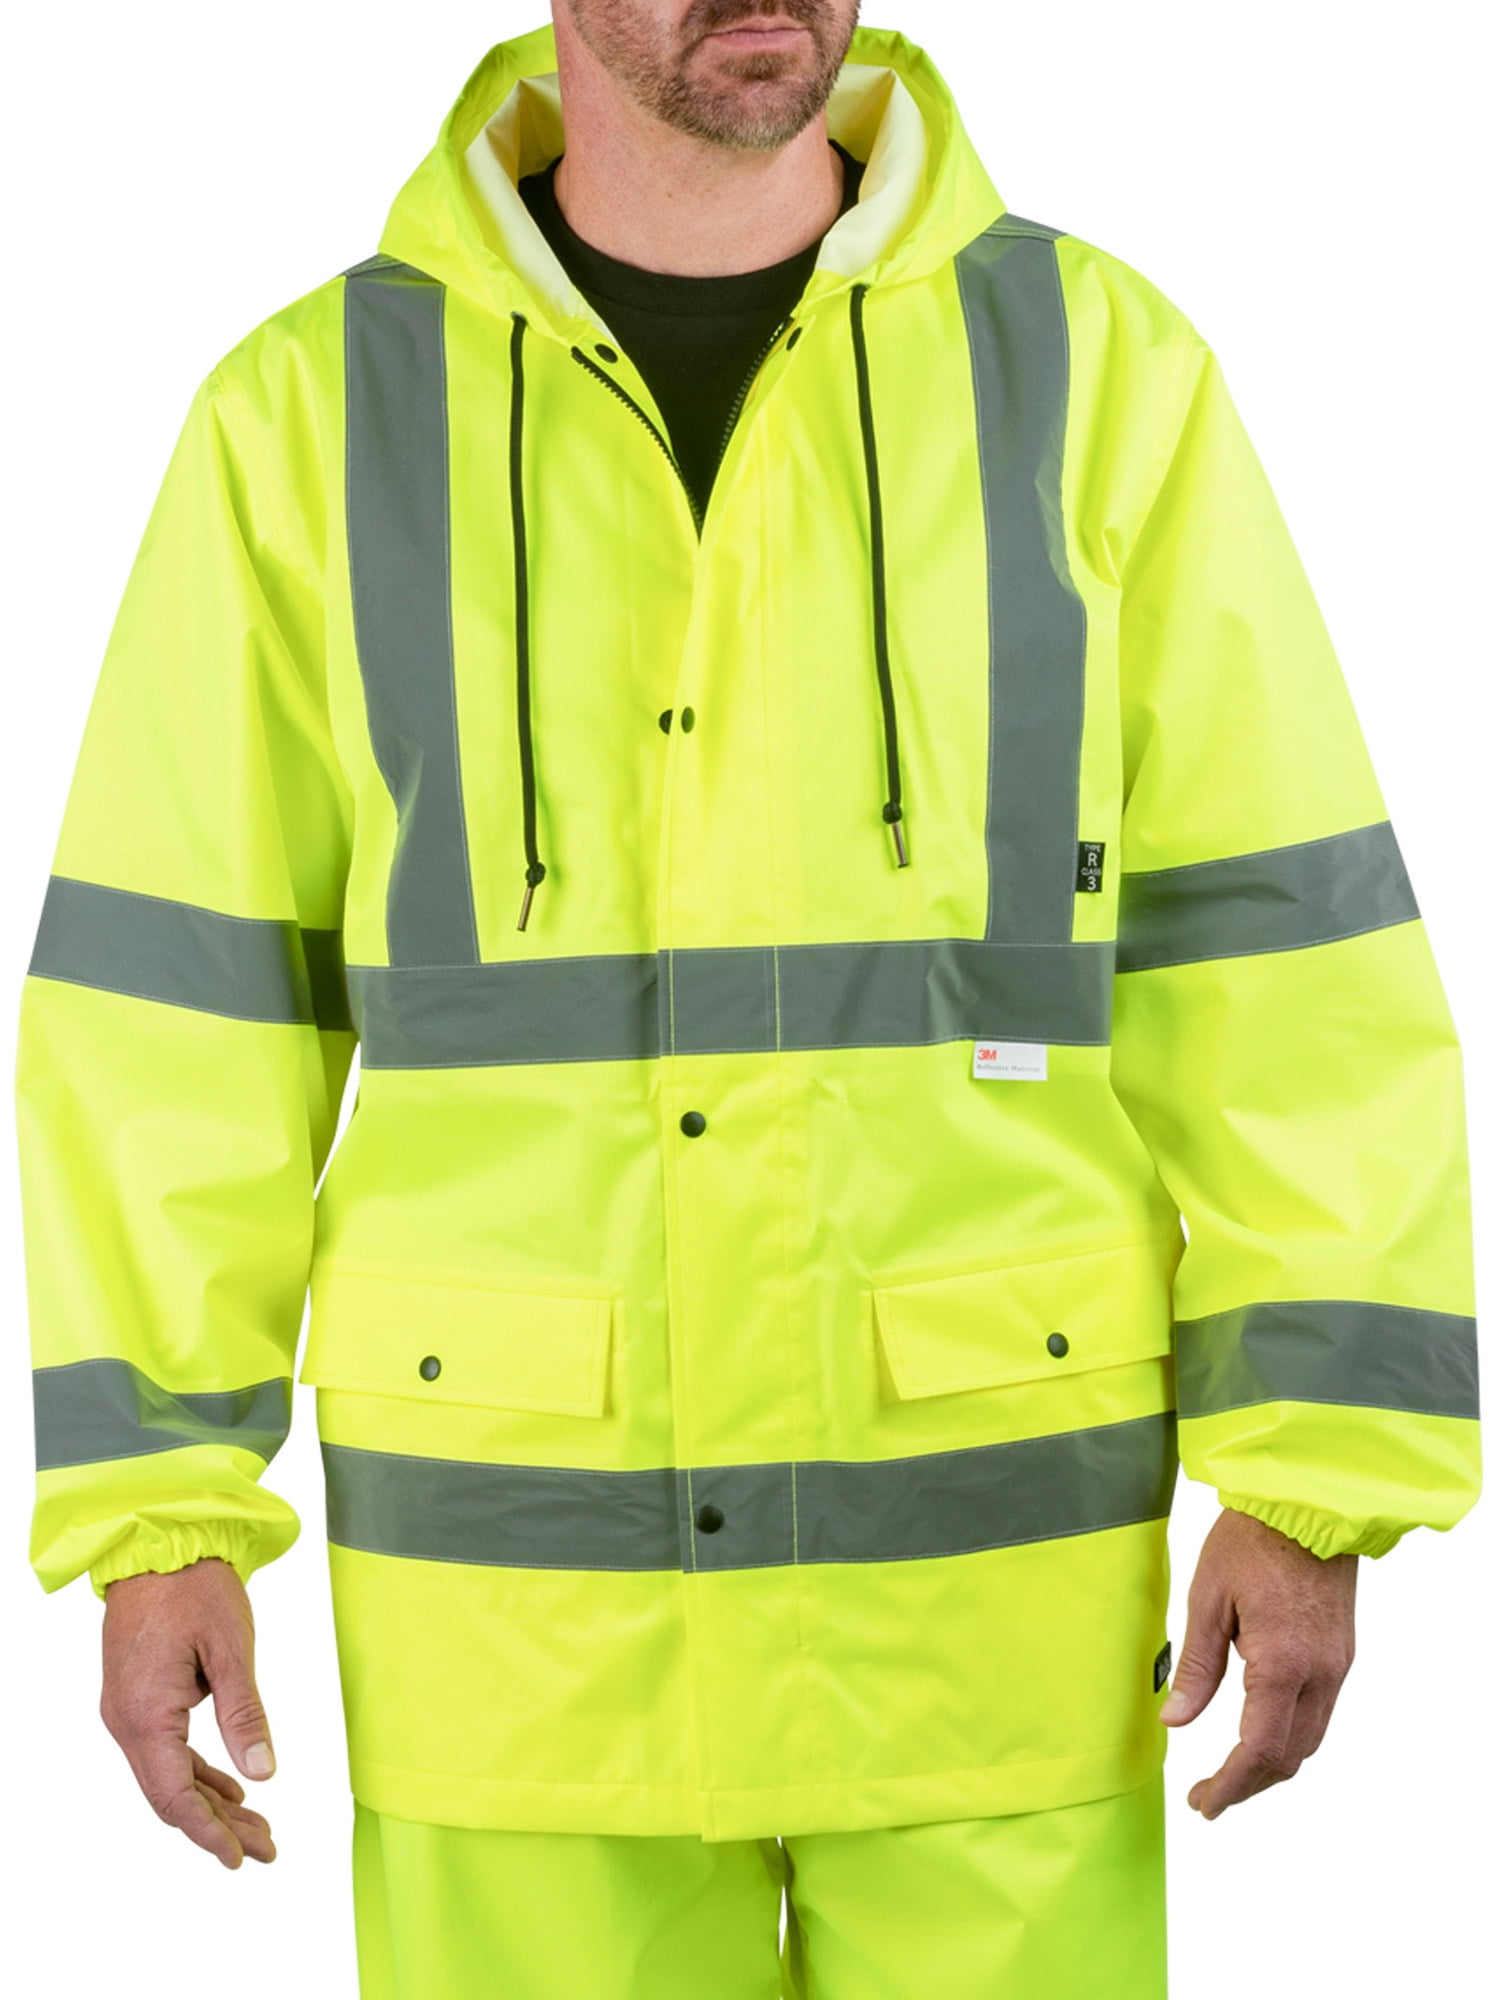 Walls Hi-Vis ANSI-3 Safety Rain Jacket Large Reflective Material Type R Class 3 